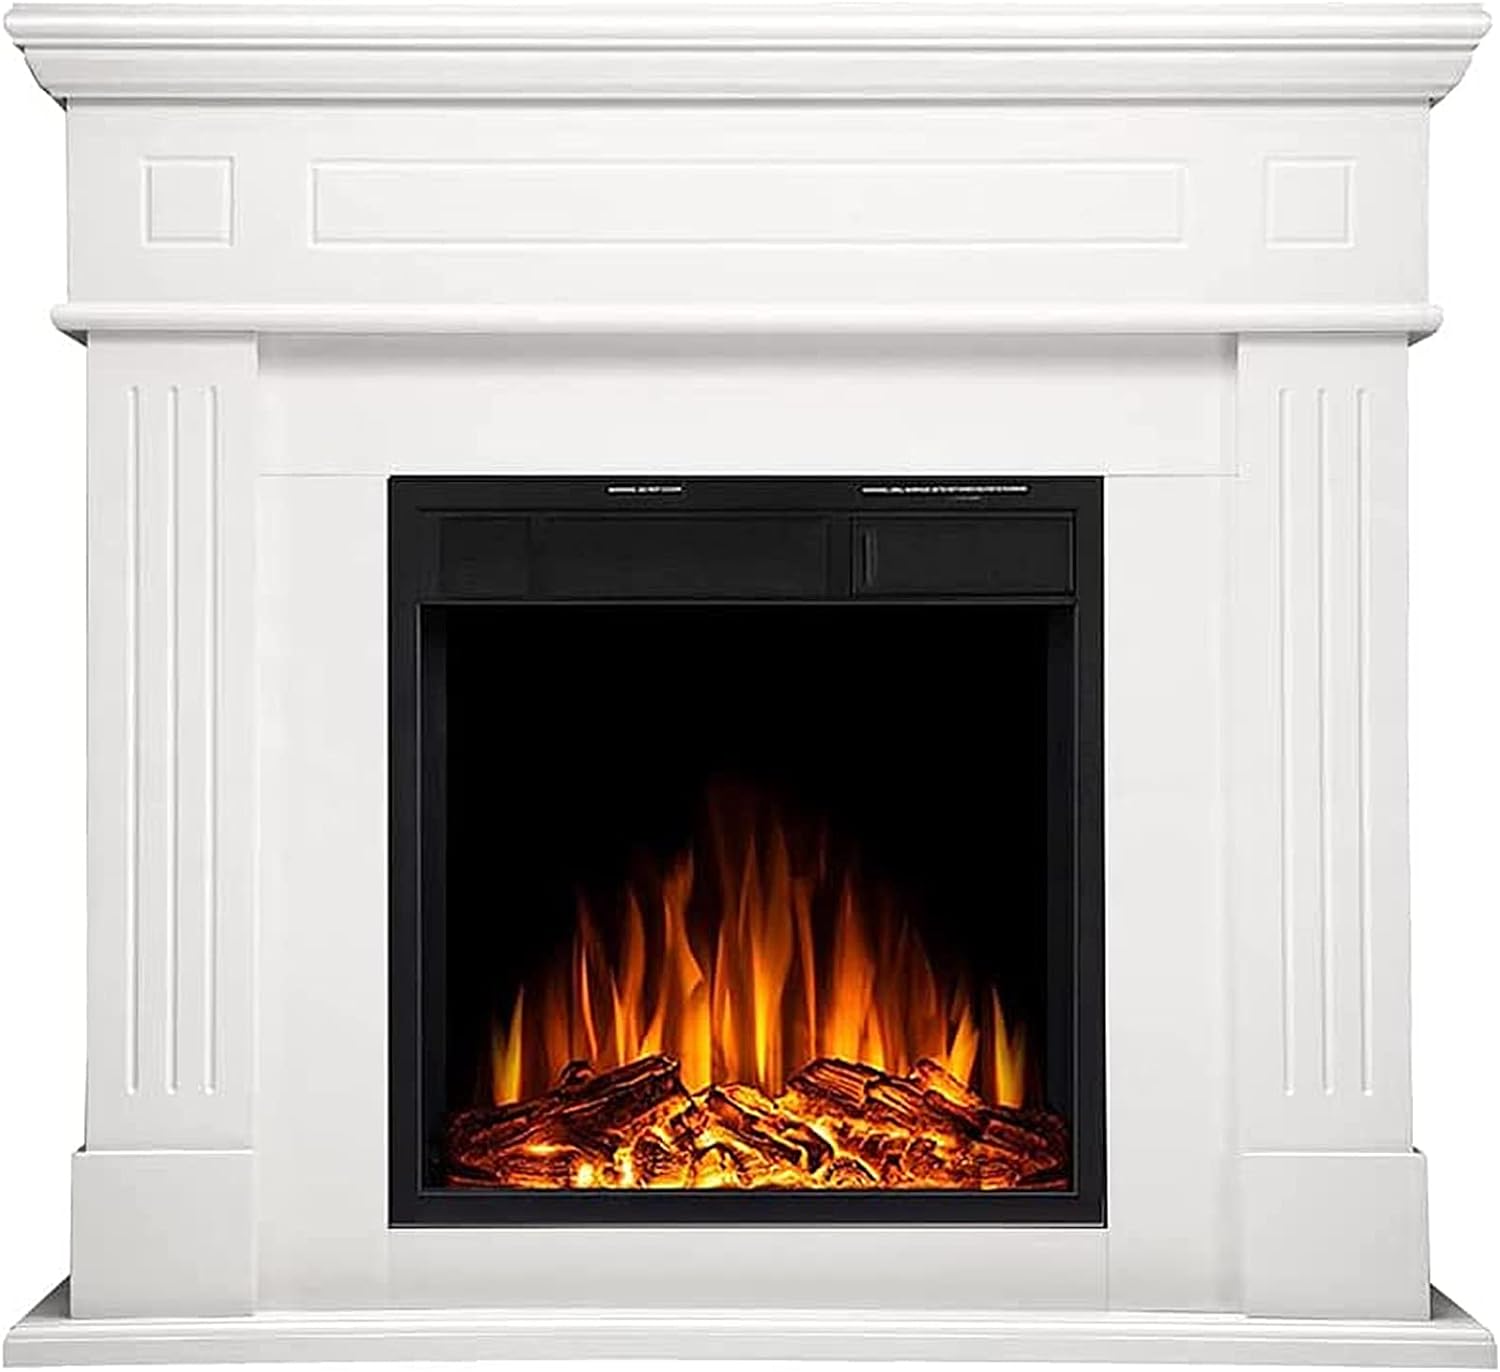 R.W.FLAME 43"Electric Fireplace Mantel Wooden Surround Firebox,750W/1500W, Black